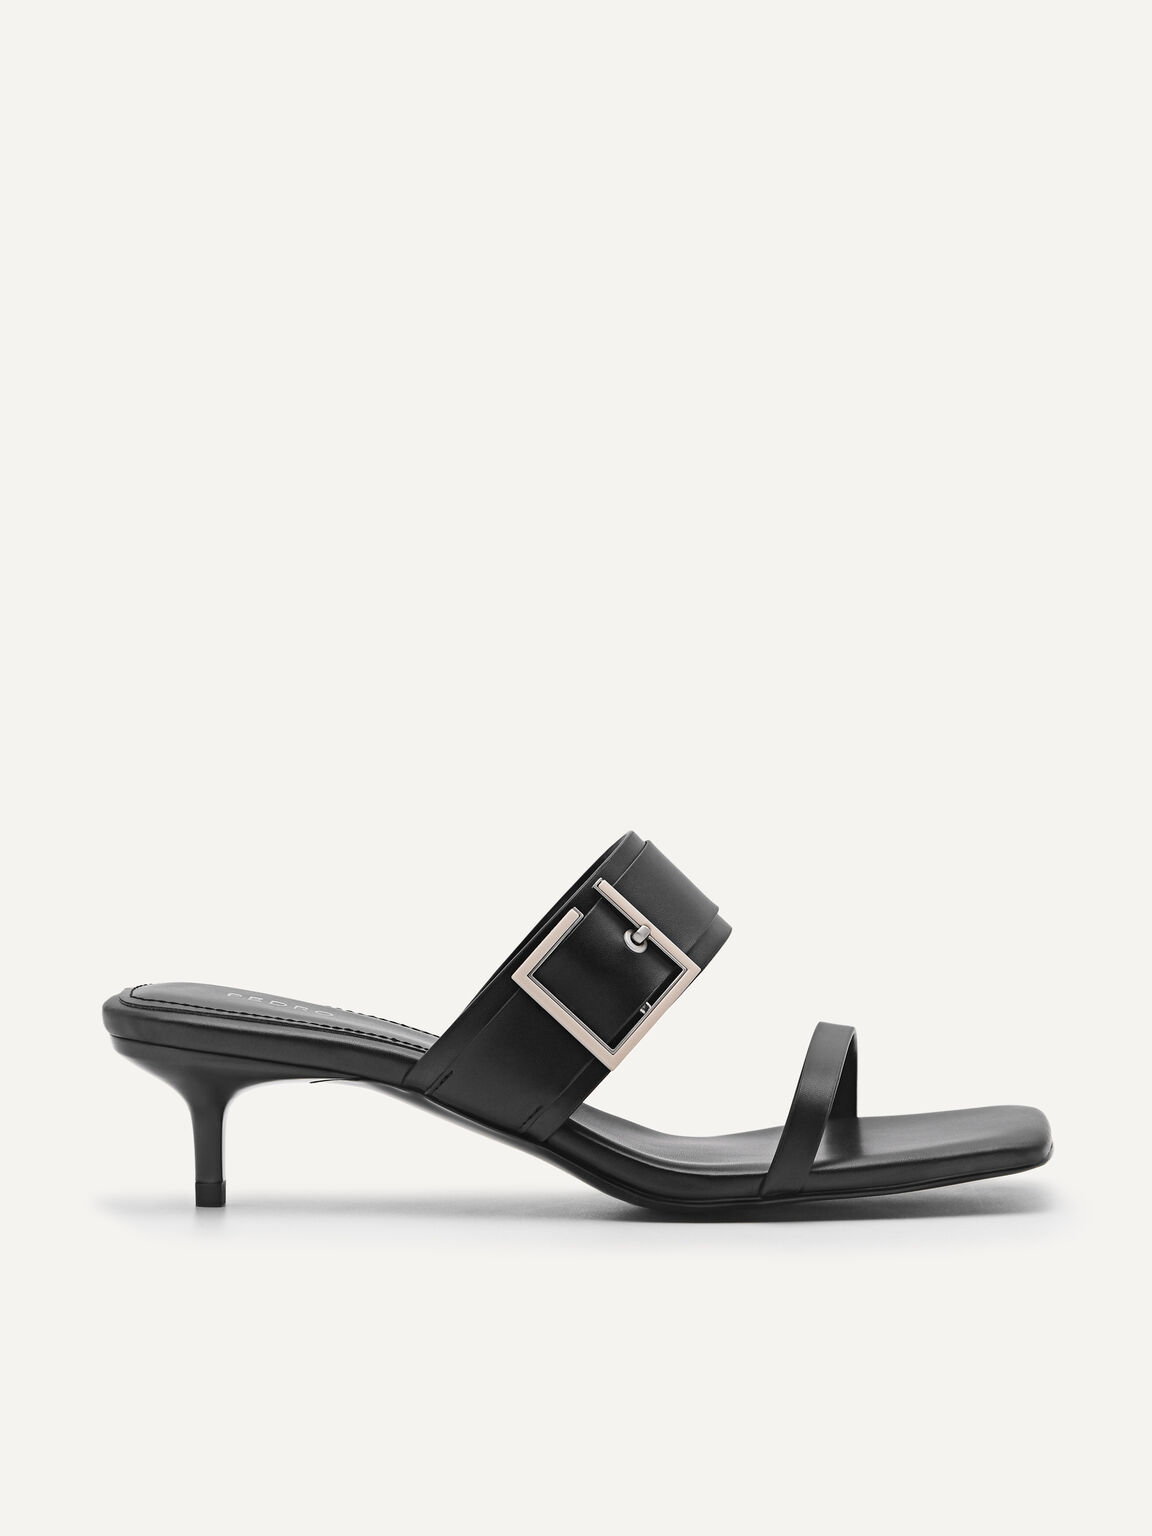 Double Strap Heeled Sandals, Black, hi-res